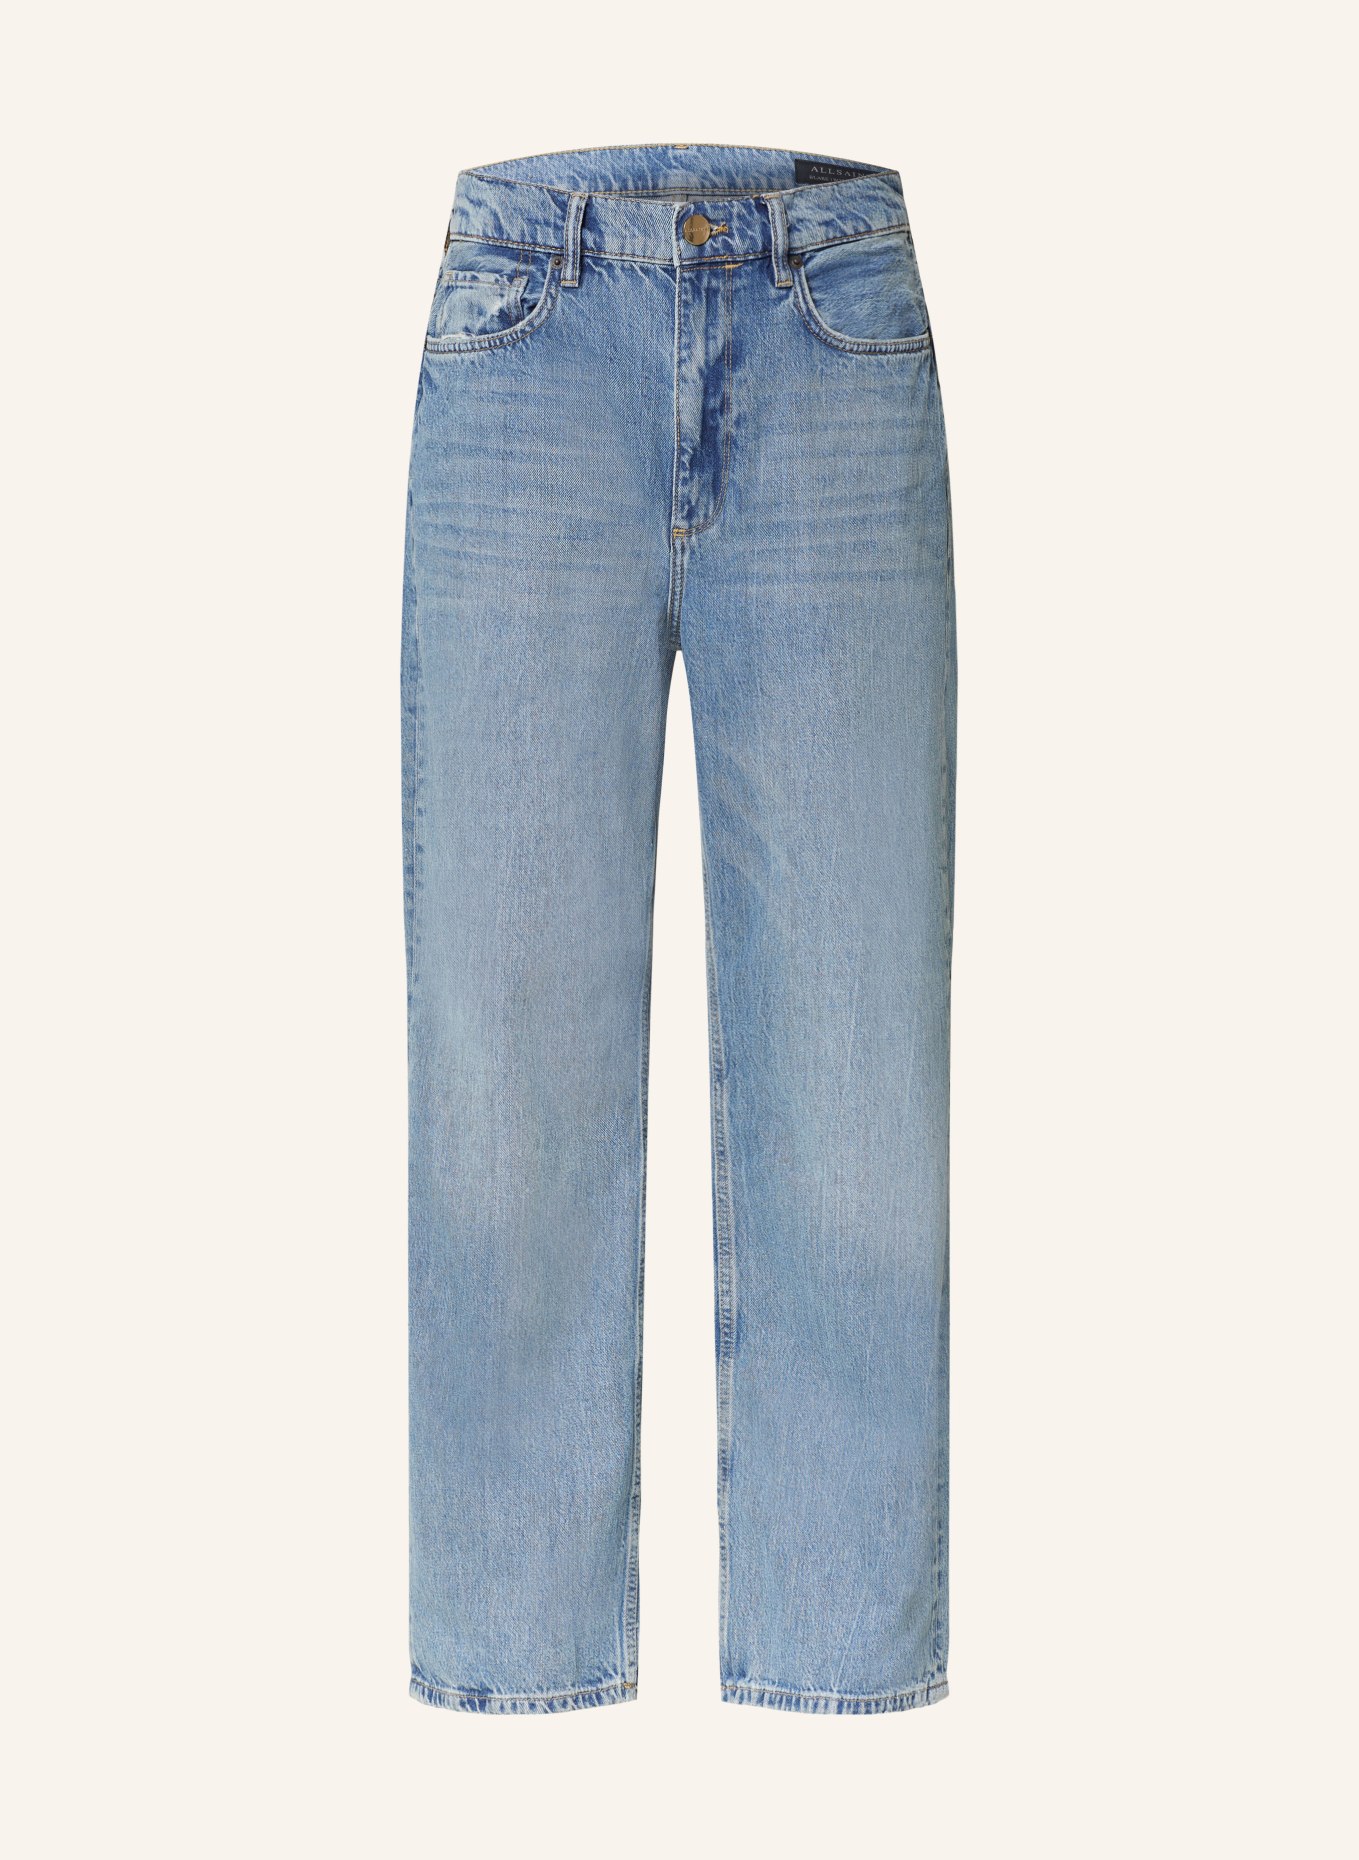 ALLSAINTS Straight Jeans BLAKE, Farbe: 2999 Vintage Indigo (Bild 1)